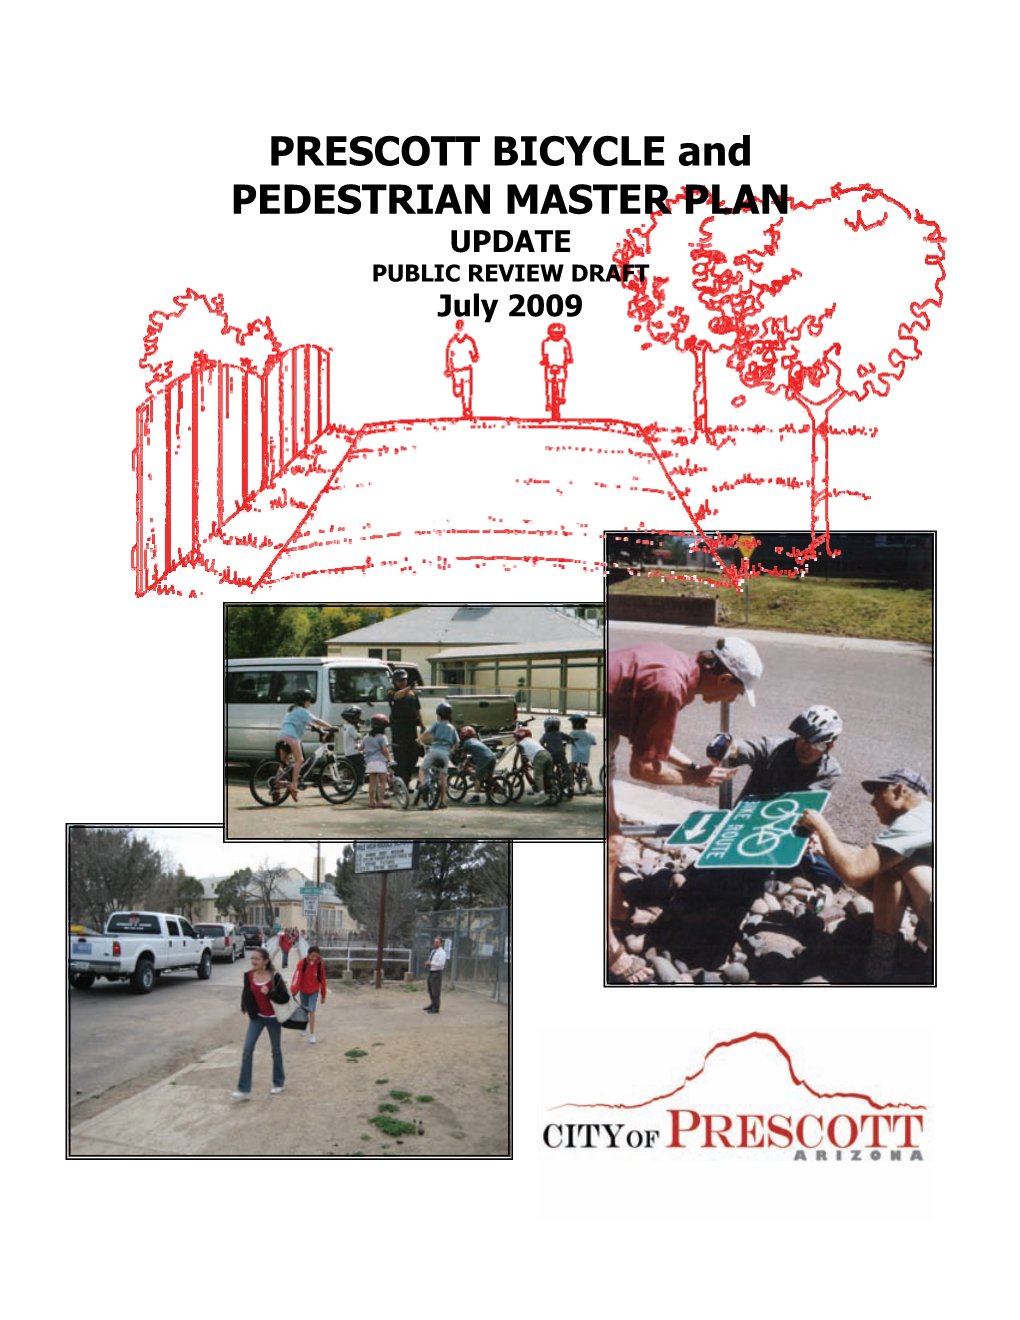 PRESCOTT BICYCLE and PEDESTRIAN MASTER PLAN